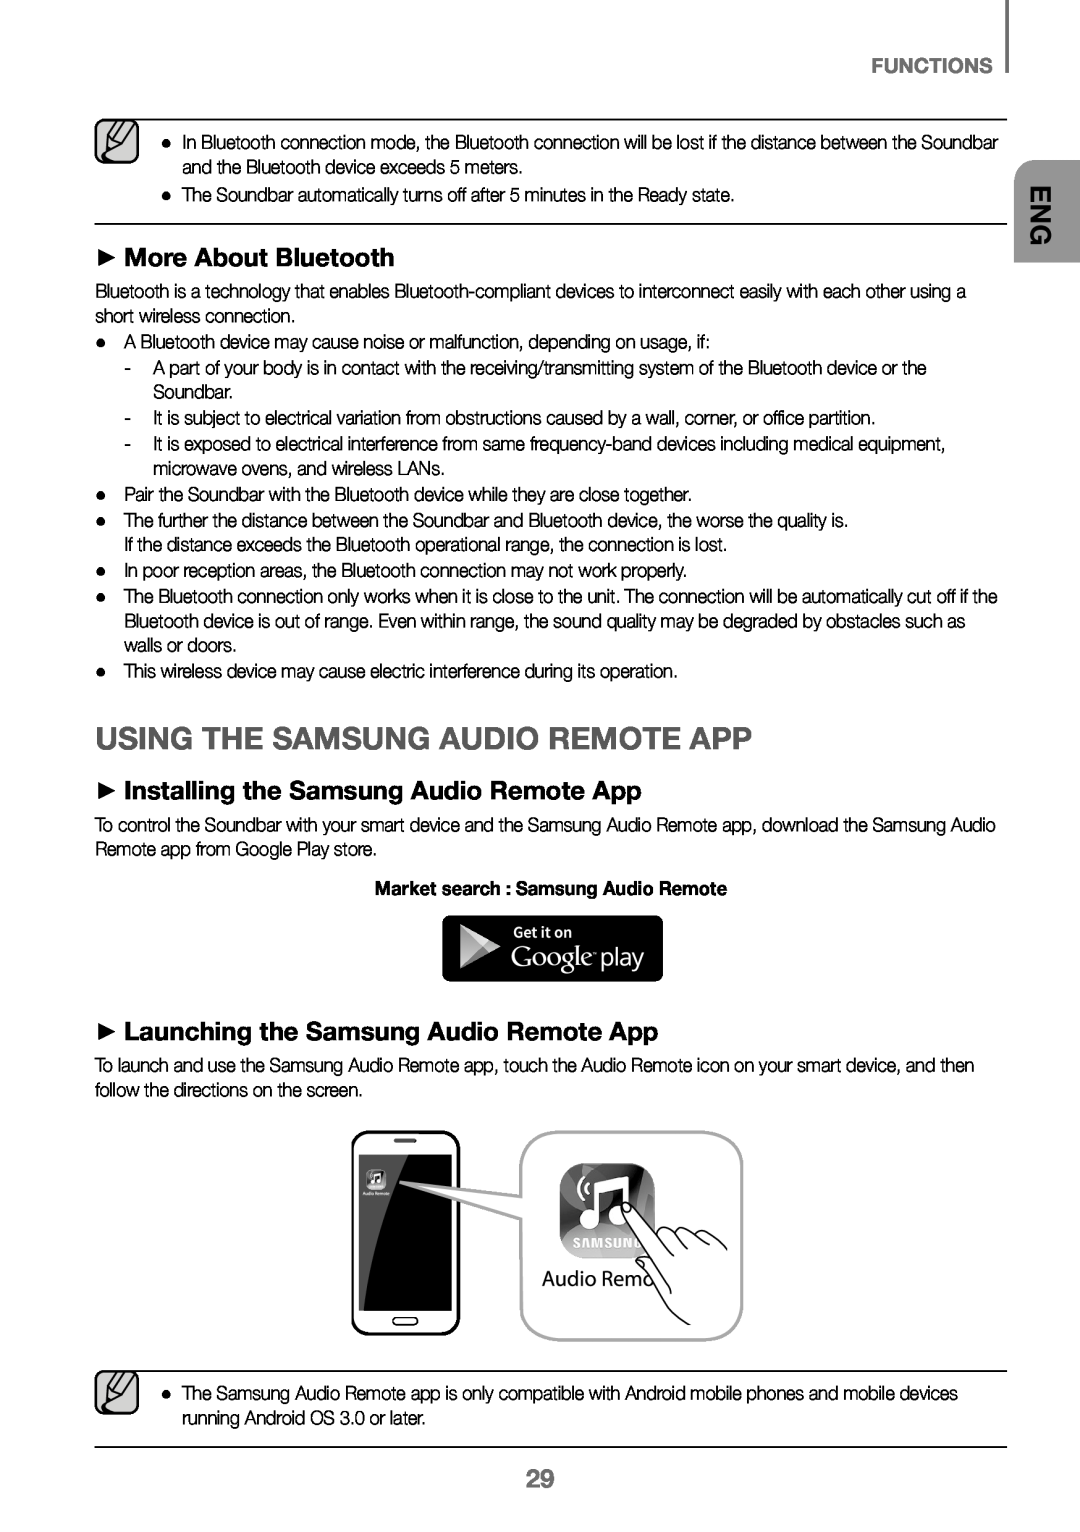 Samsung HW-J450/EN, HW-K450/EN, HW-J450/ZF manual ++More About Bluetooth, ++Launching the Samsung Audio Remote App, Functions 